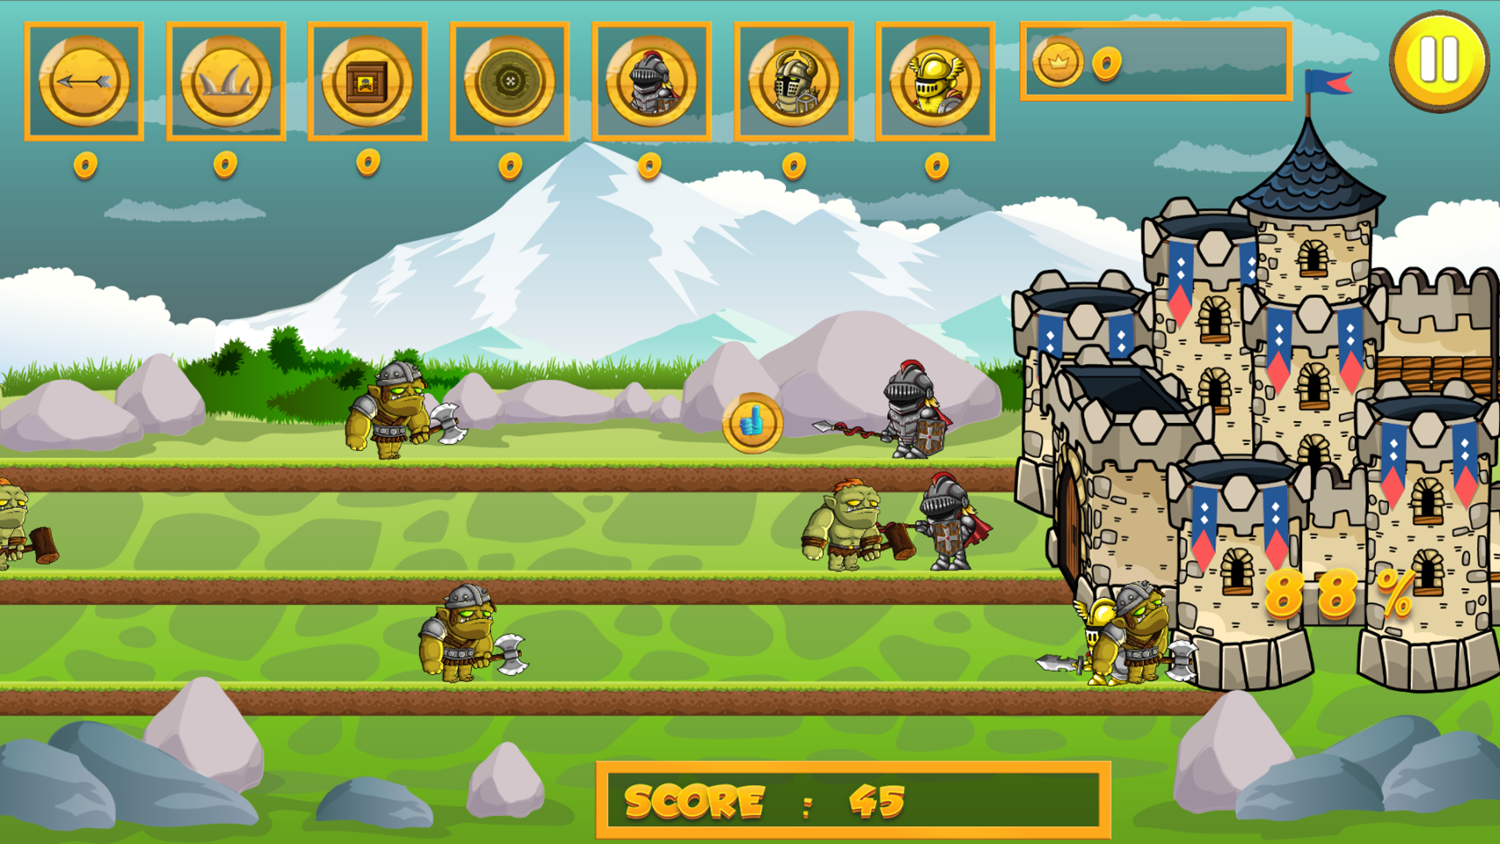 Knight vs Orc Game Play Screenshot.